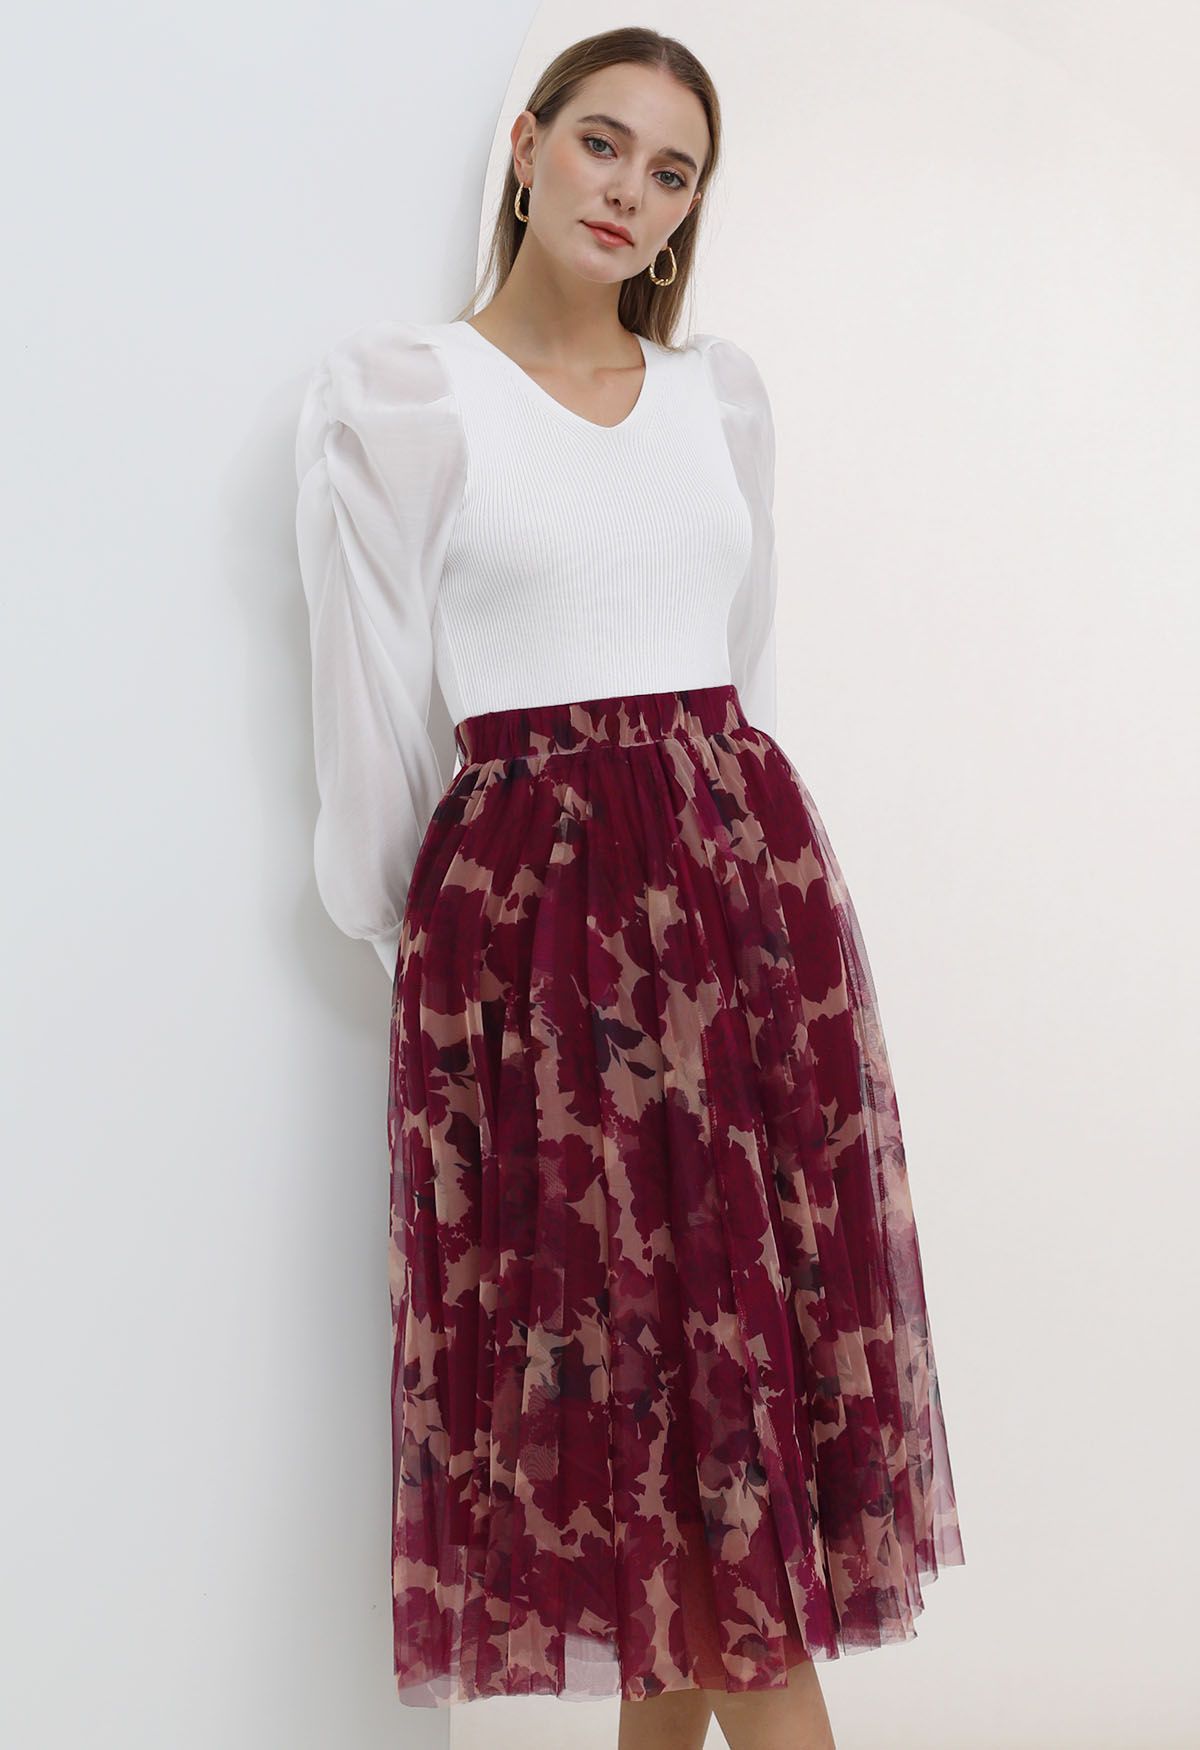 Flourishing Flower Double-Layered Mesh Tulle Skirt